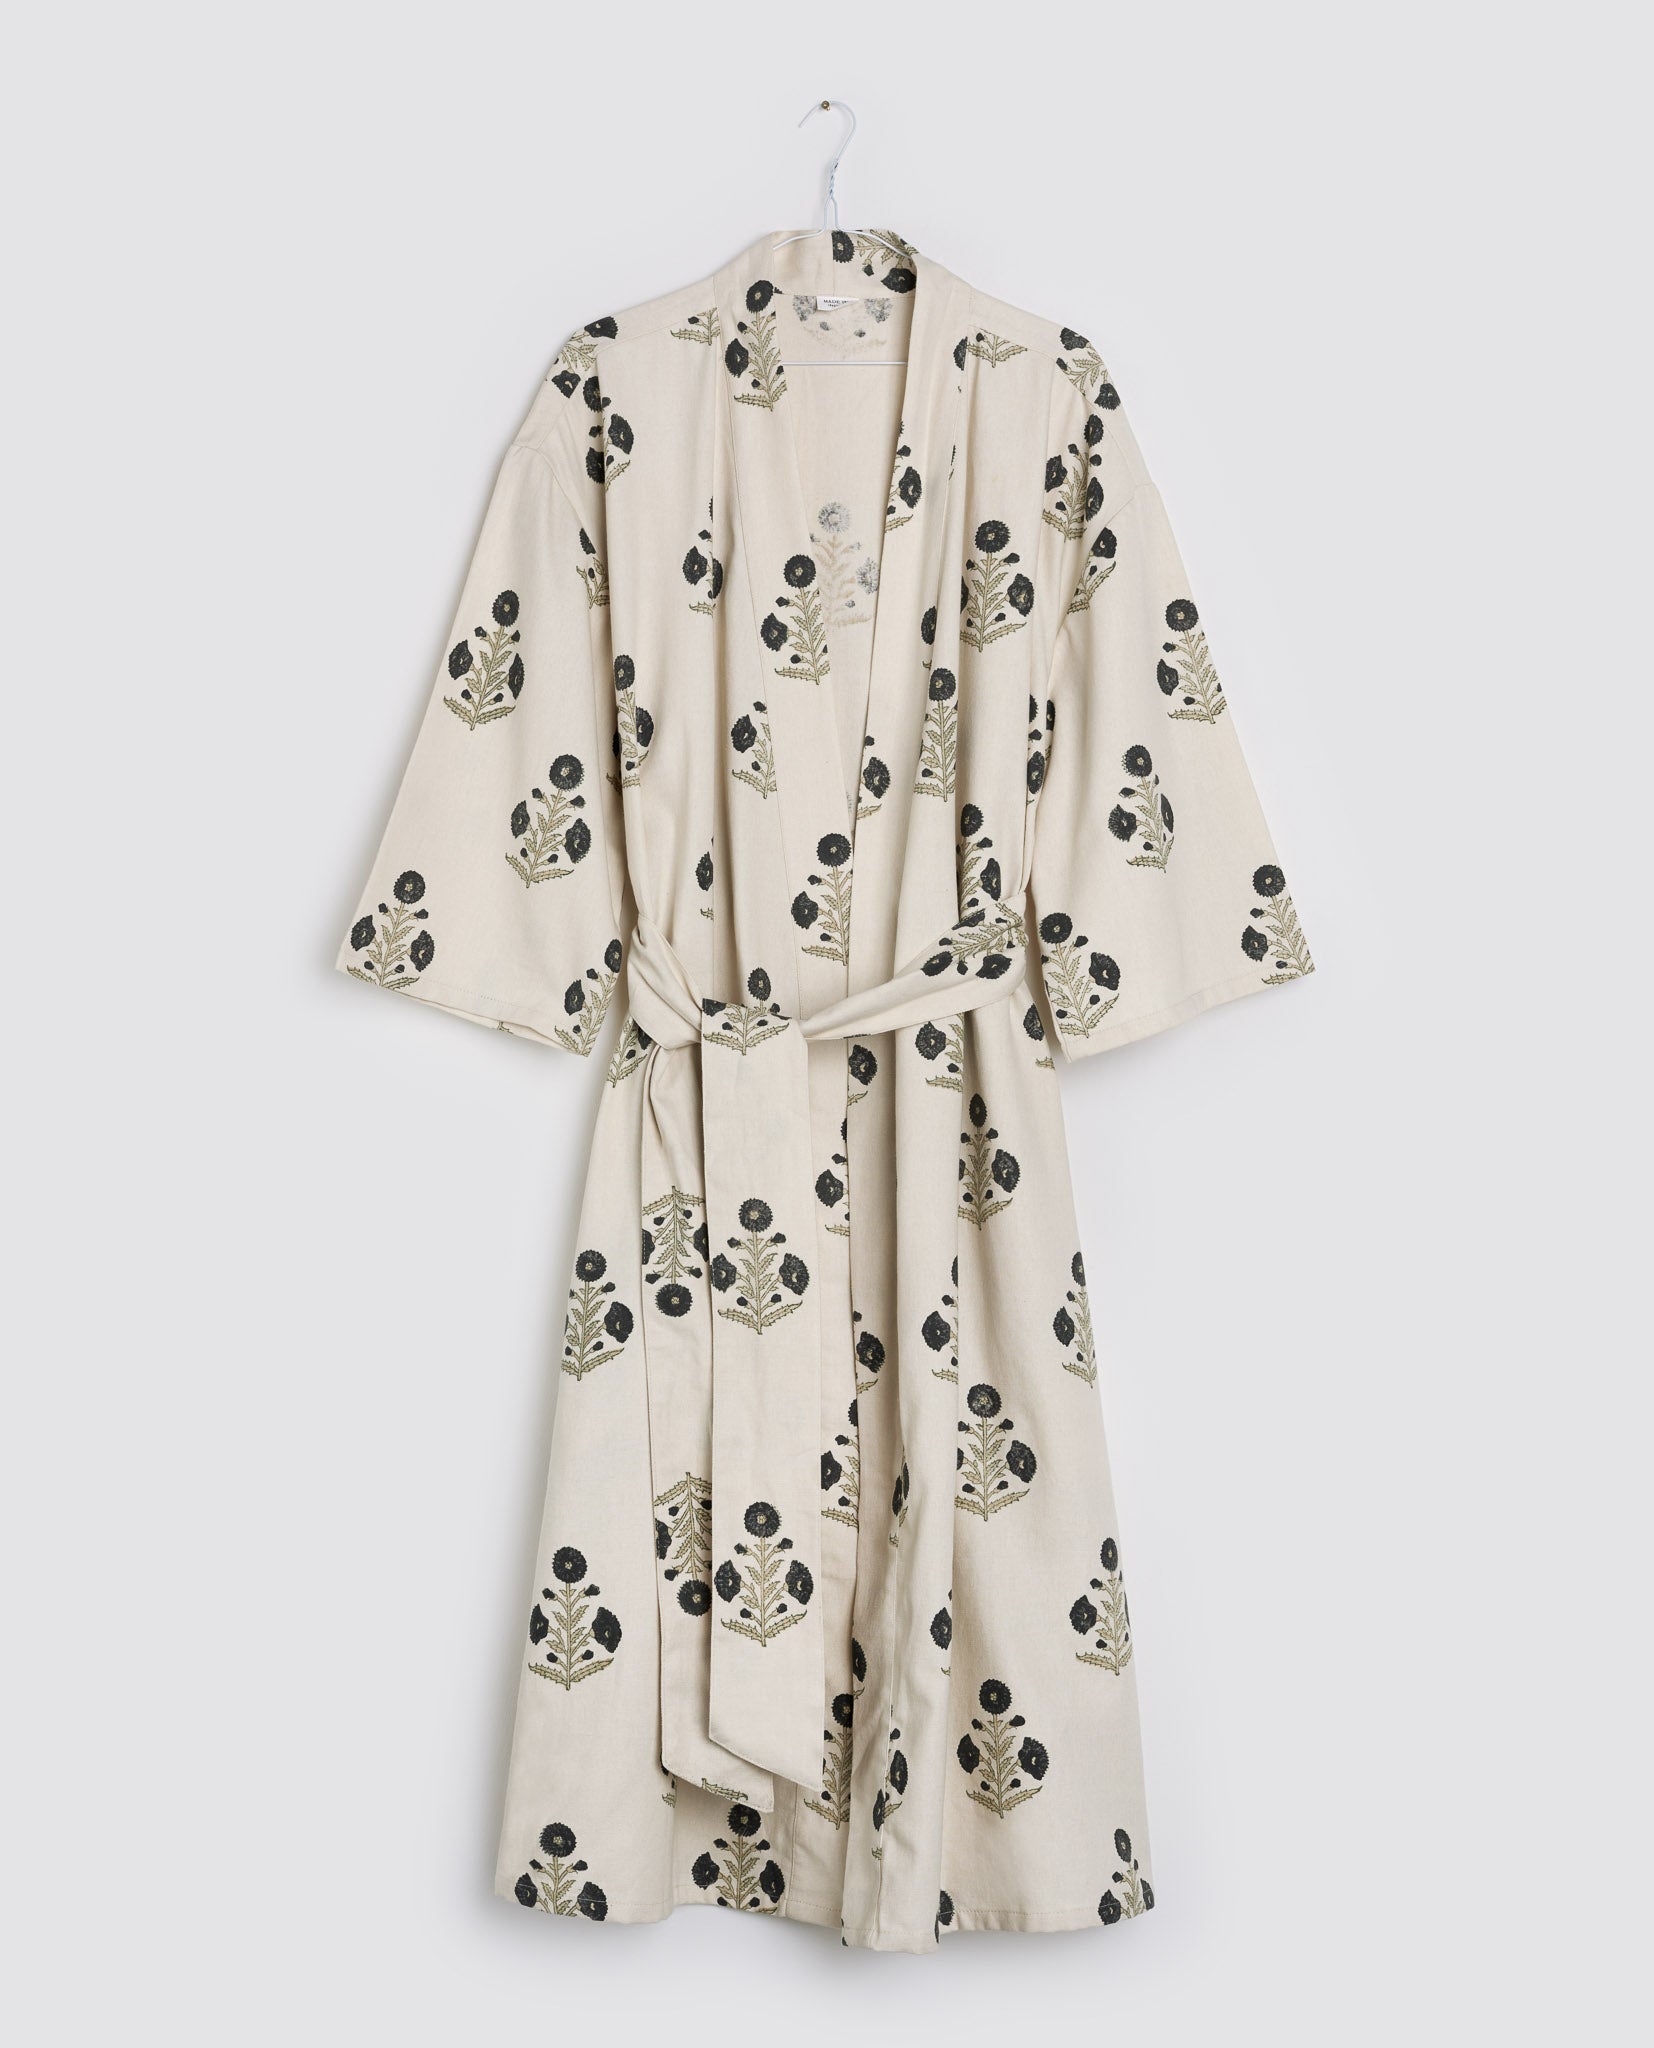 Traditional hand Block Printed Cotton Kimono Robe, Elephant Print Dressing  Gown | eBay